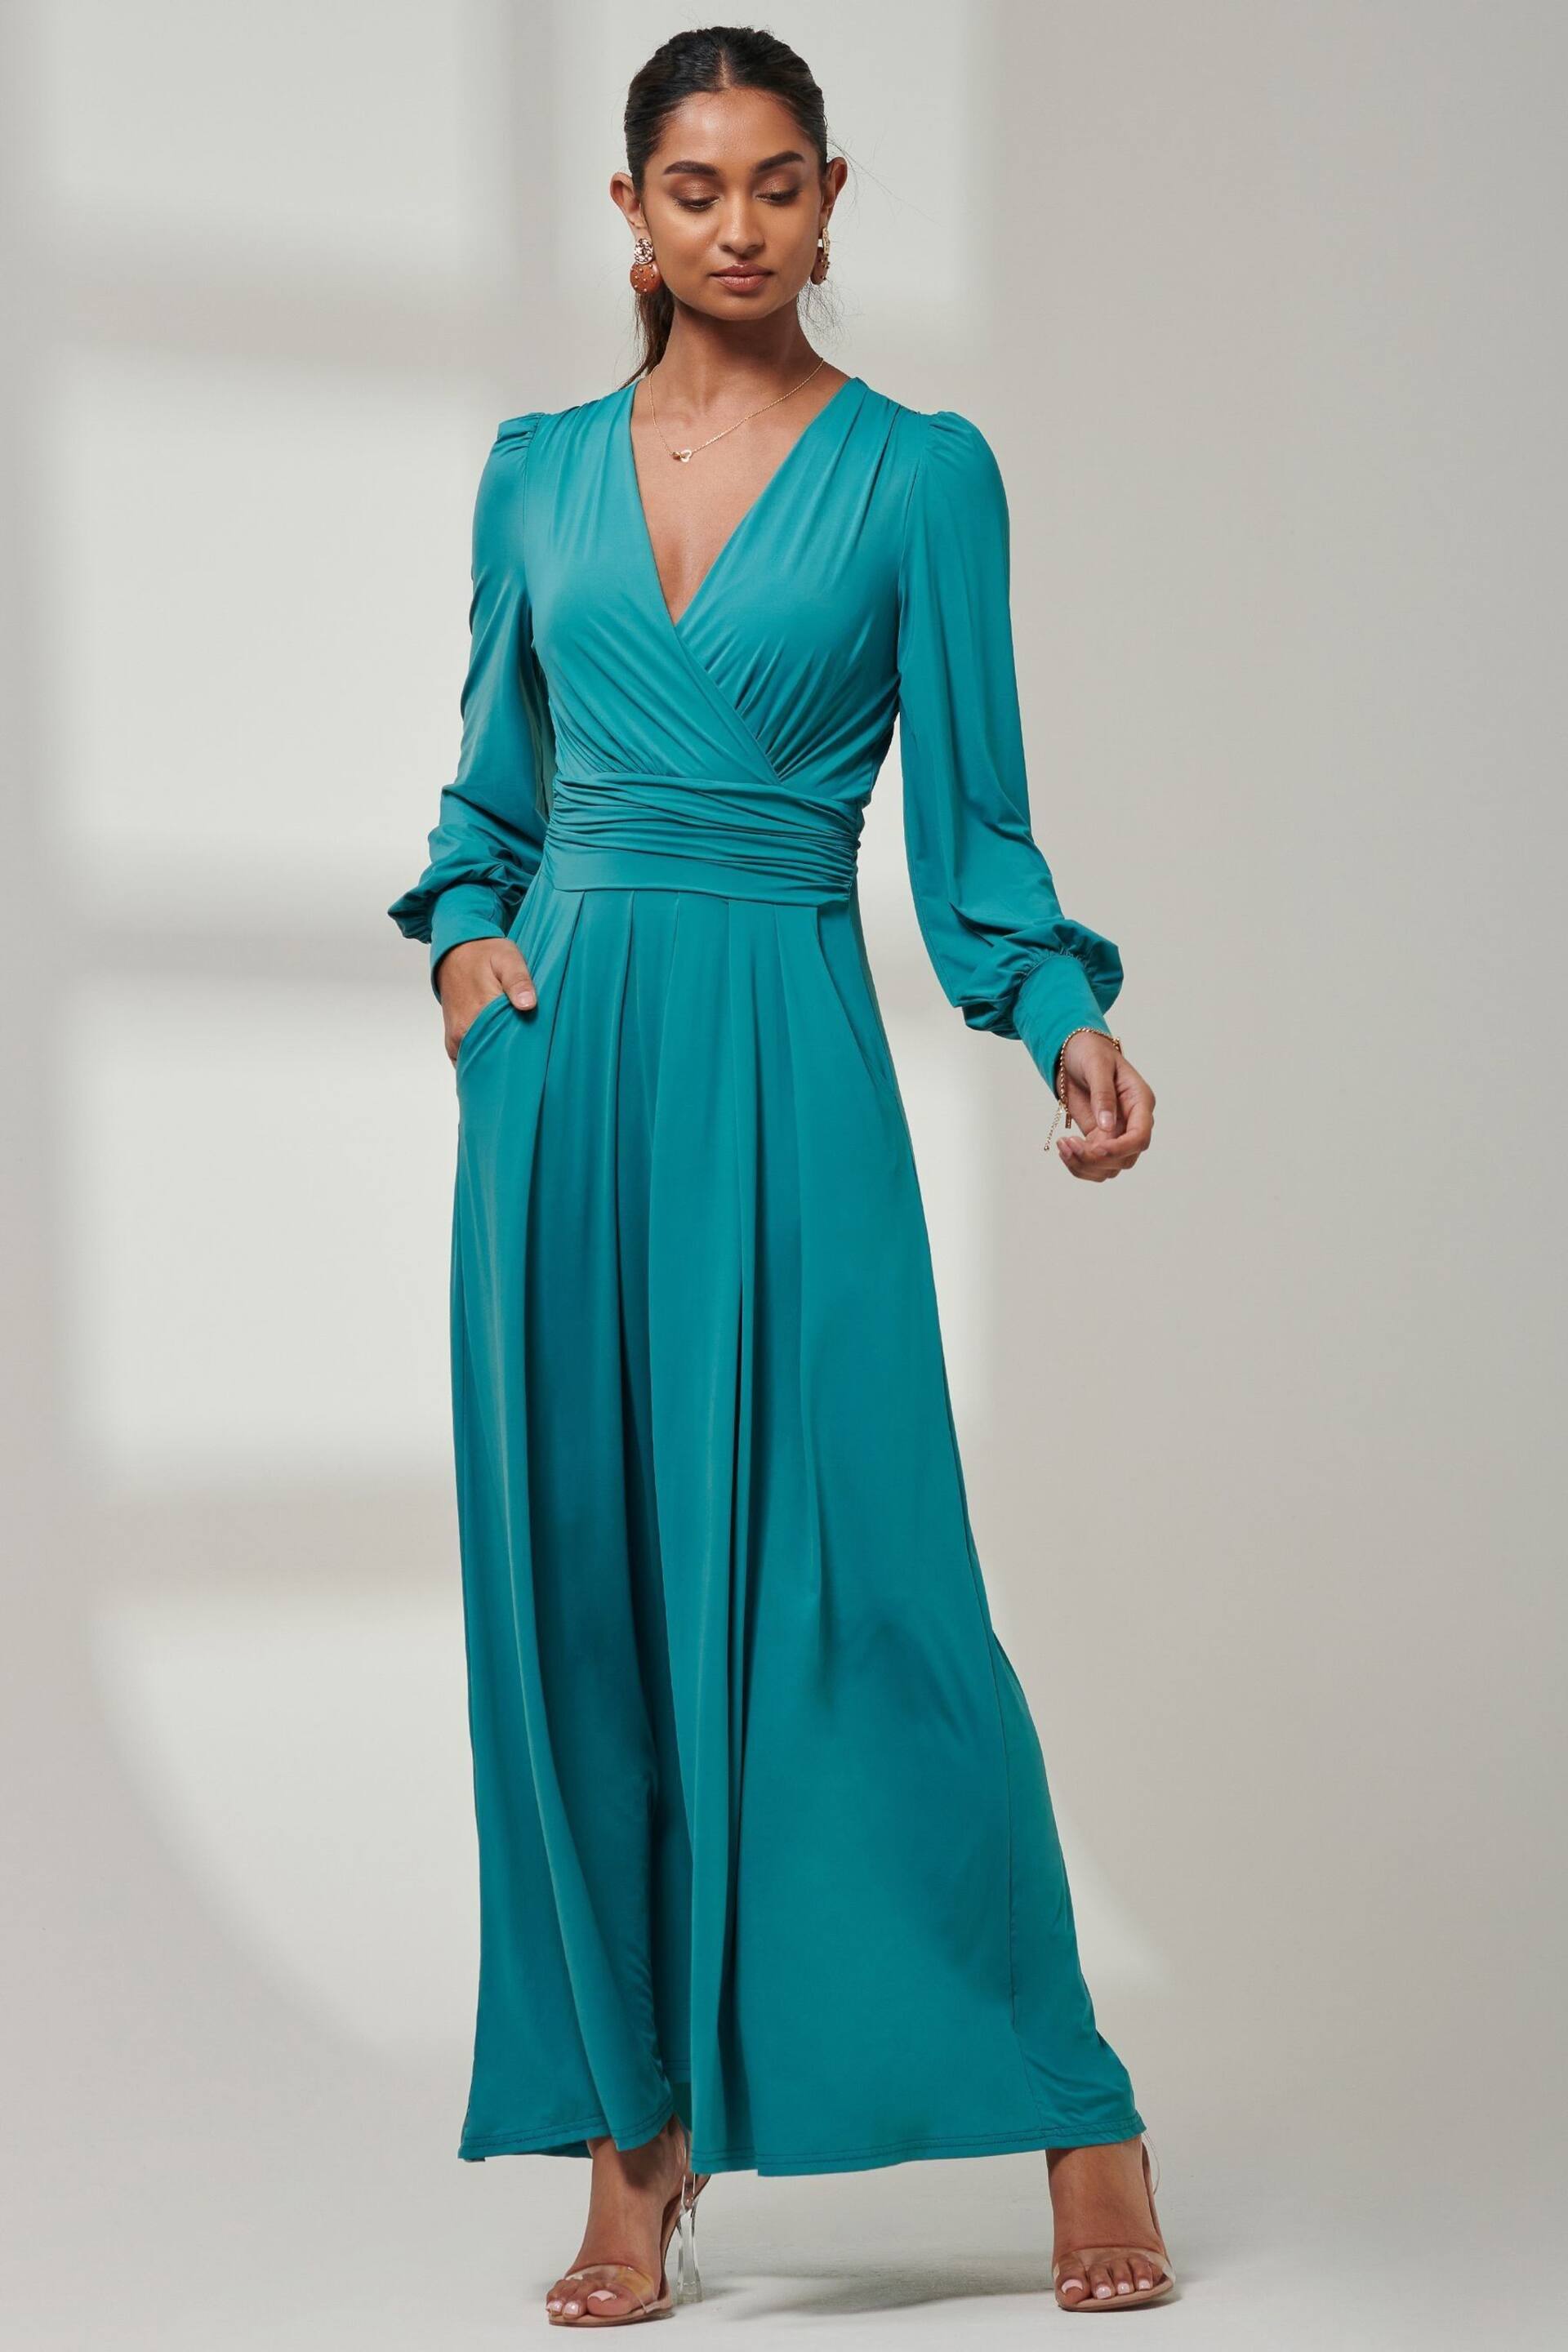 Jolie Moi Green Giulia Long Sleeve Maxi Dress - Image 6 of 6